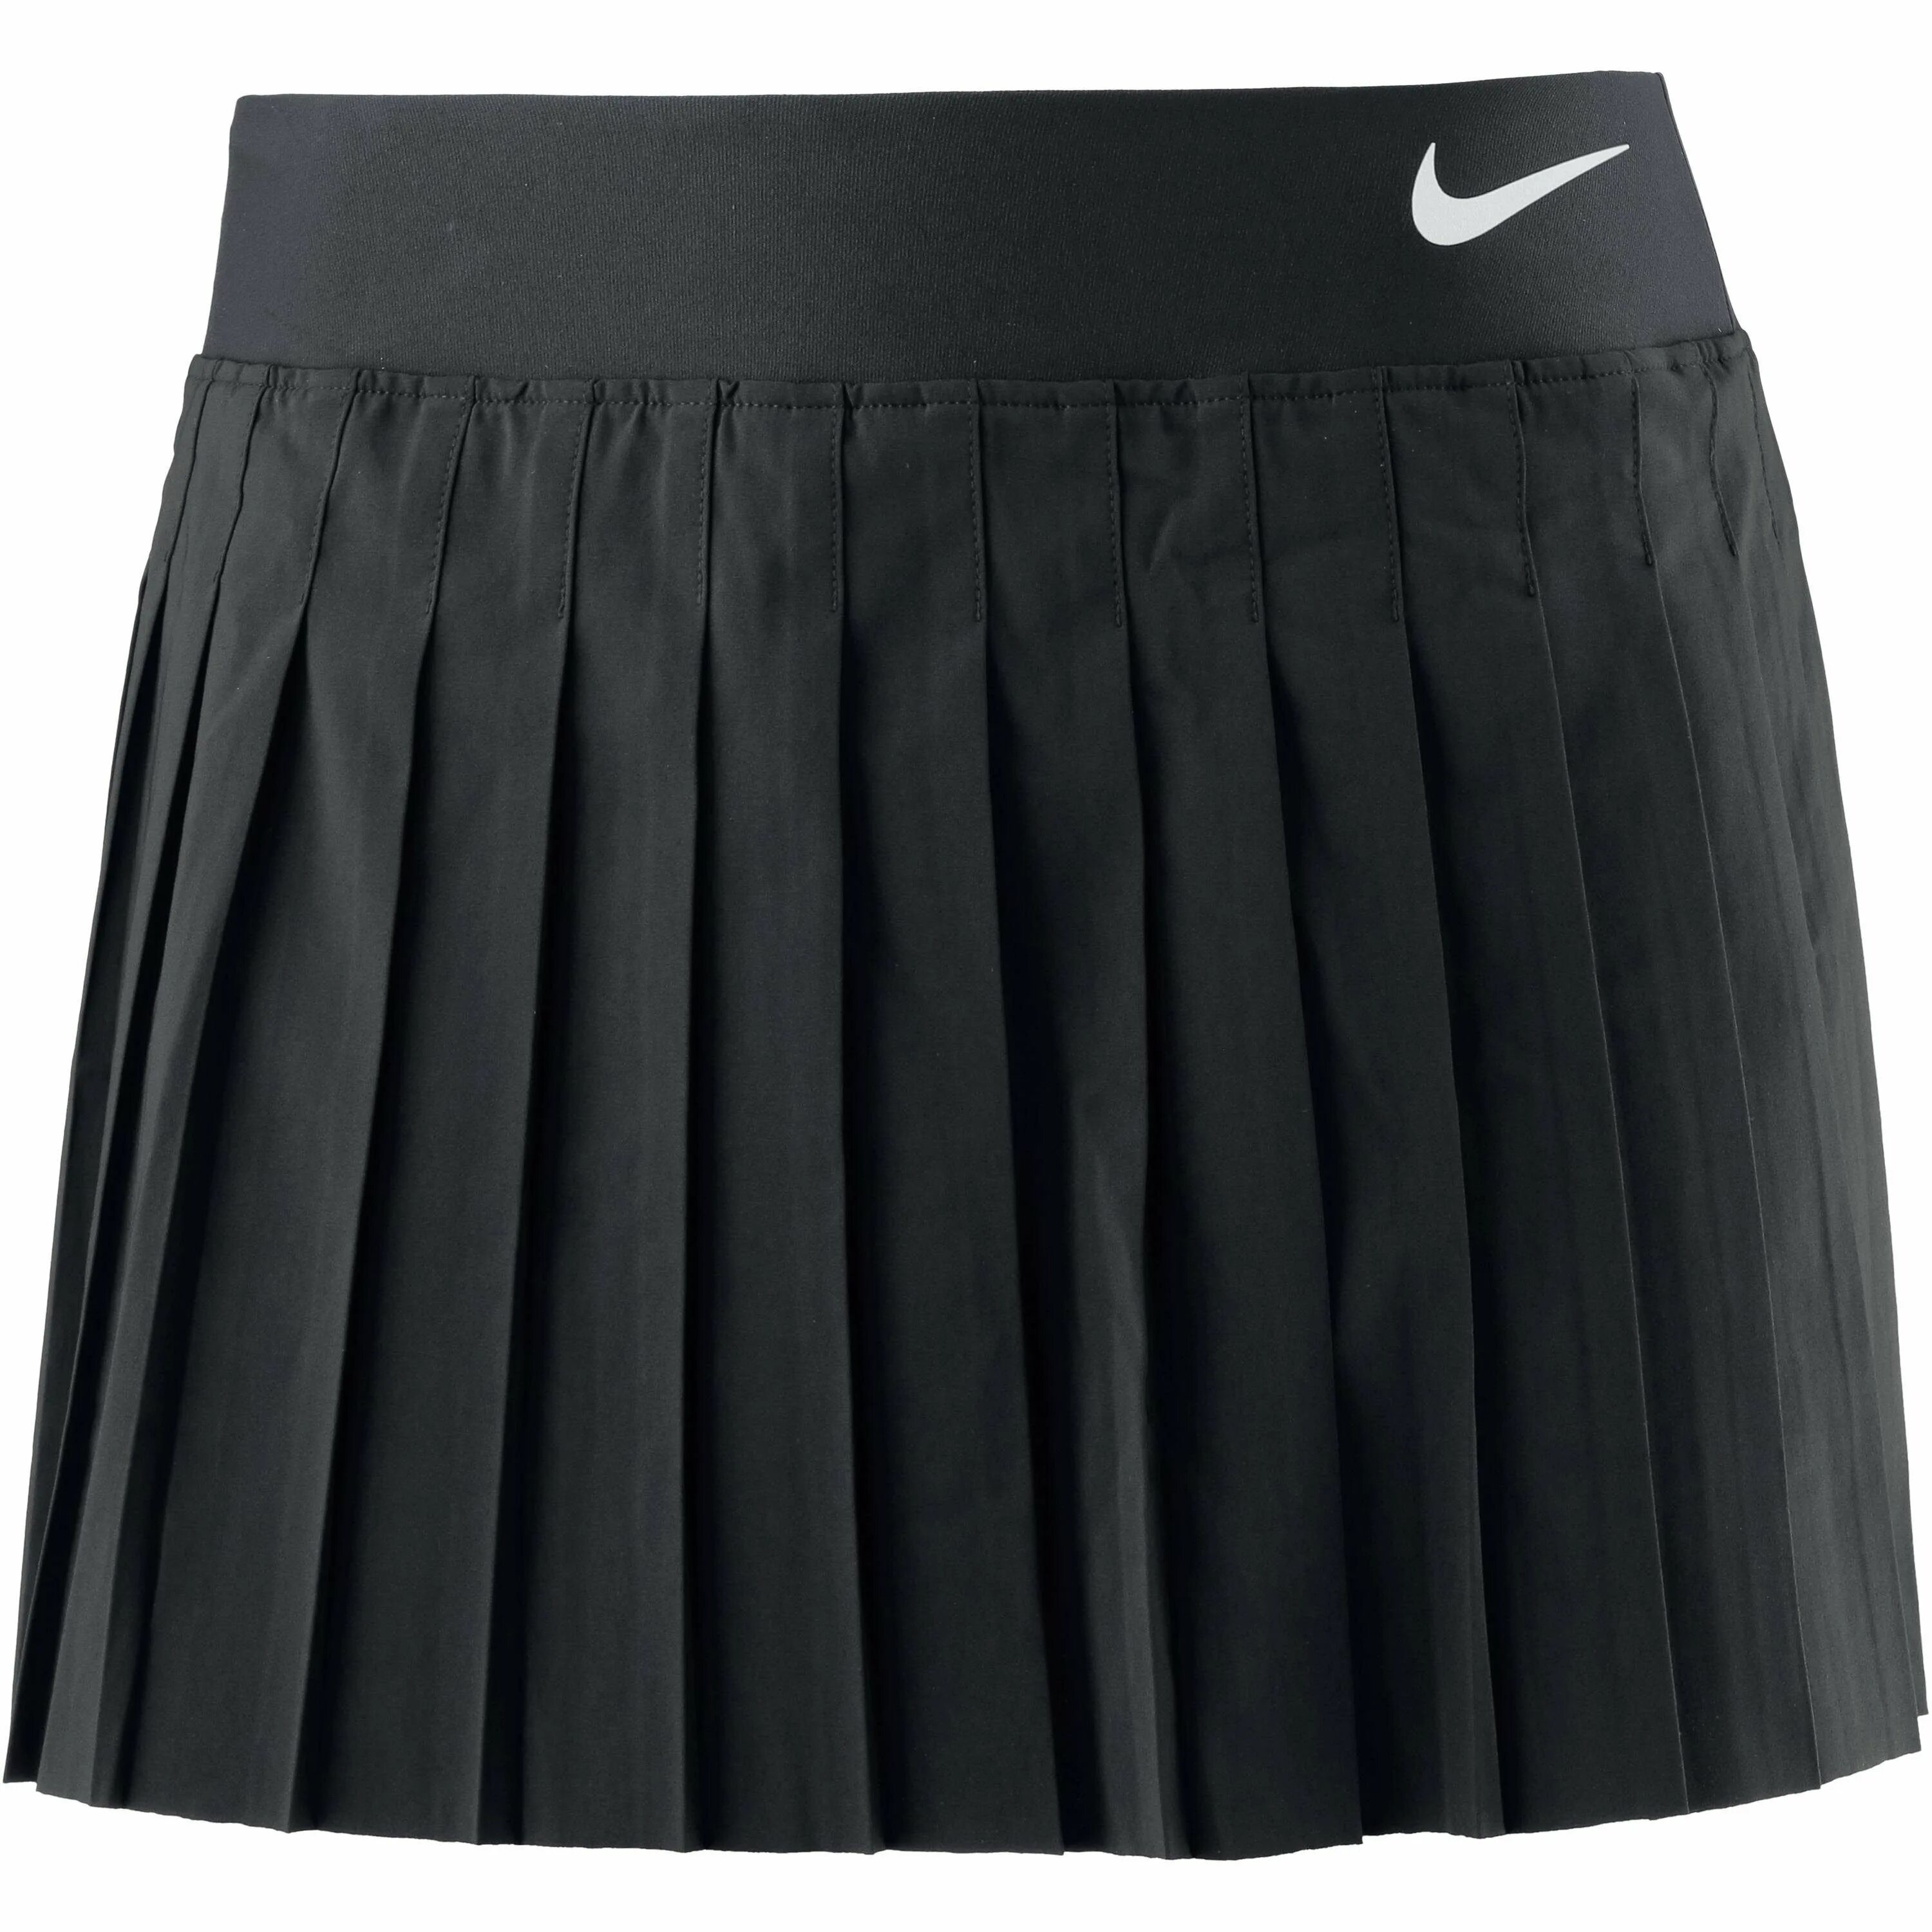 W6235r Black теннисная юбка Alo. Befree юбка теннисная черная. Теннисная юбка 2020 тренд. Теннисная юбка Ив сен Лоран.